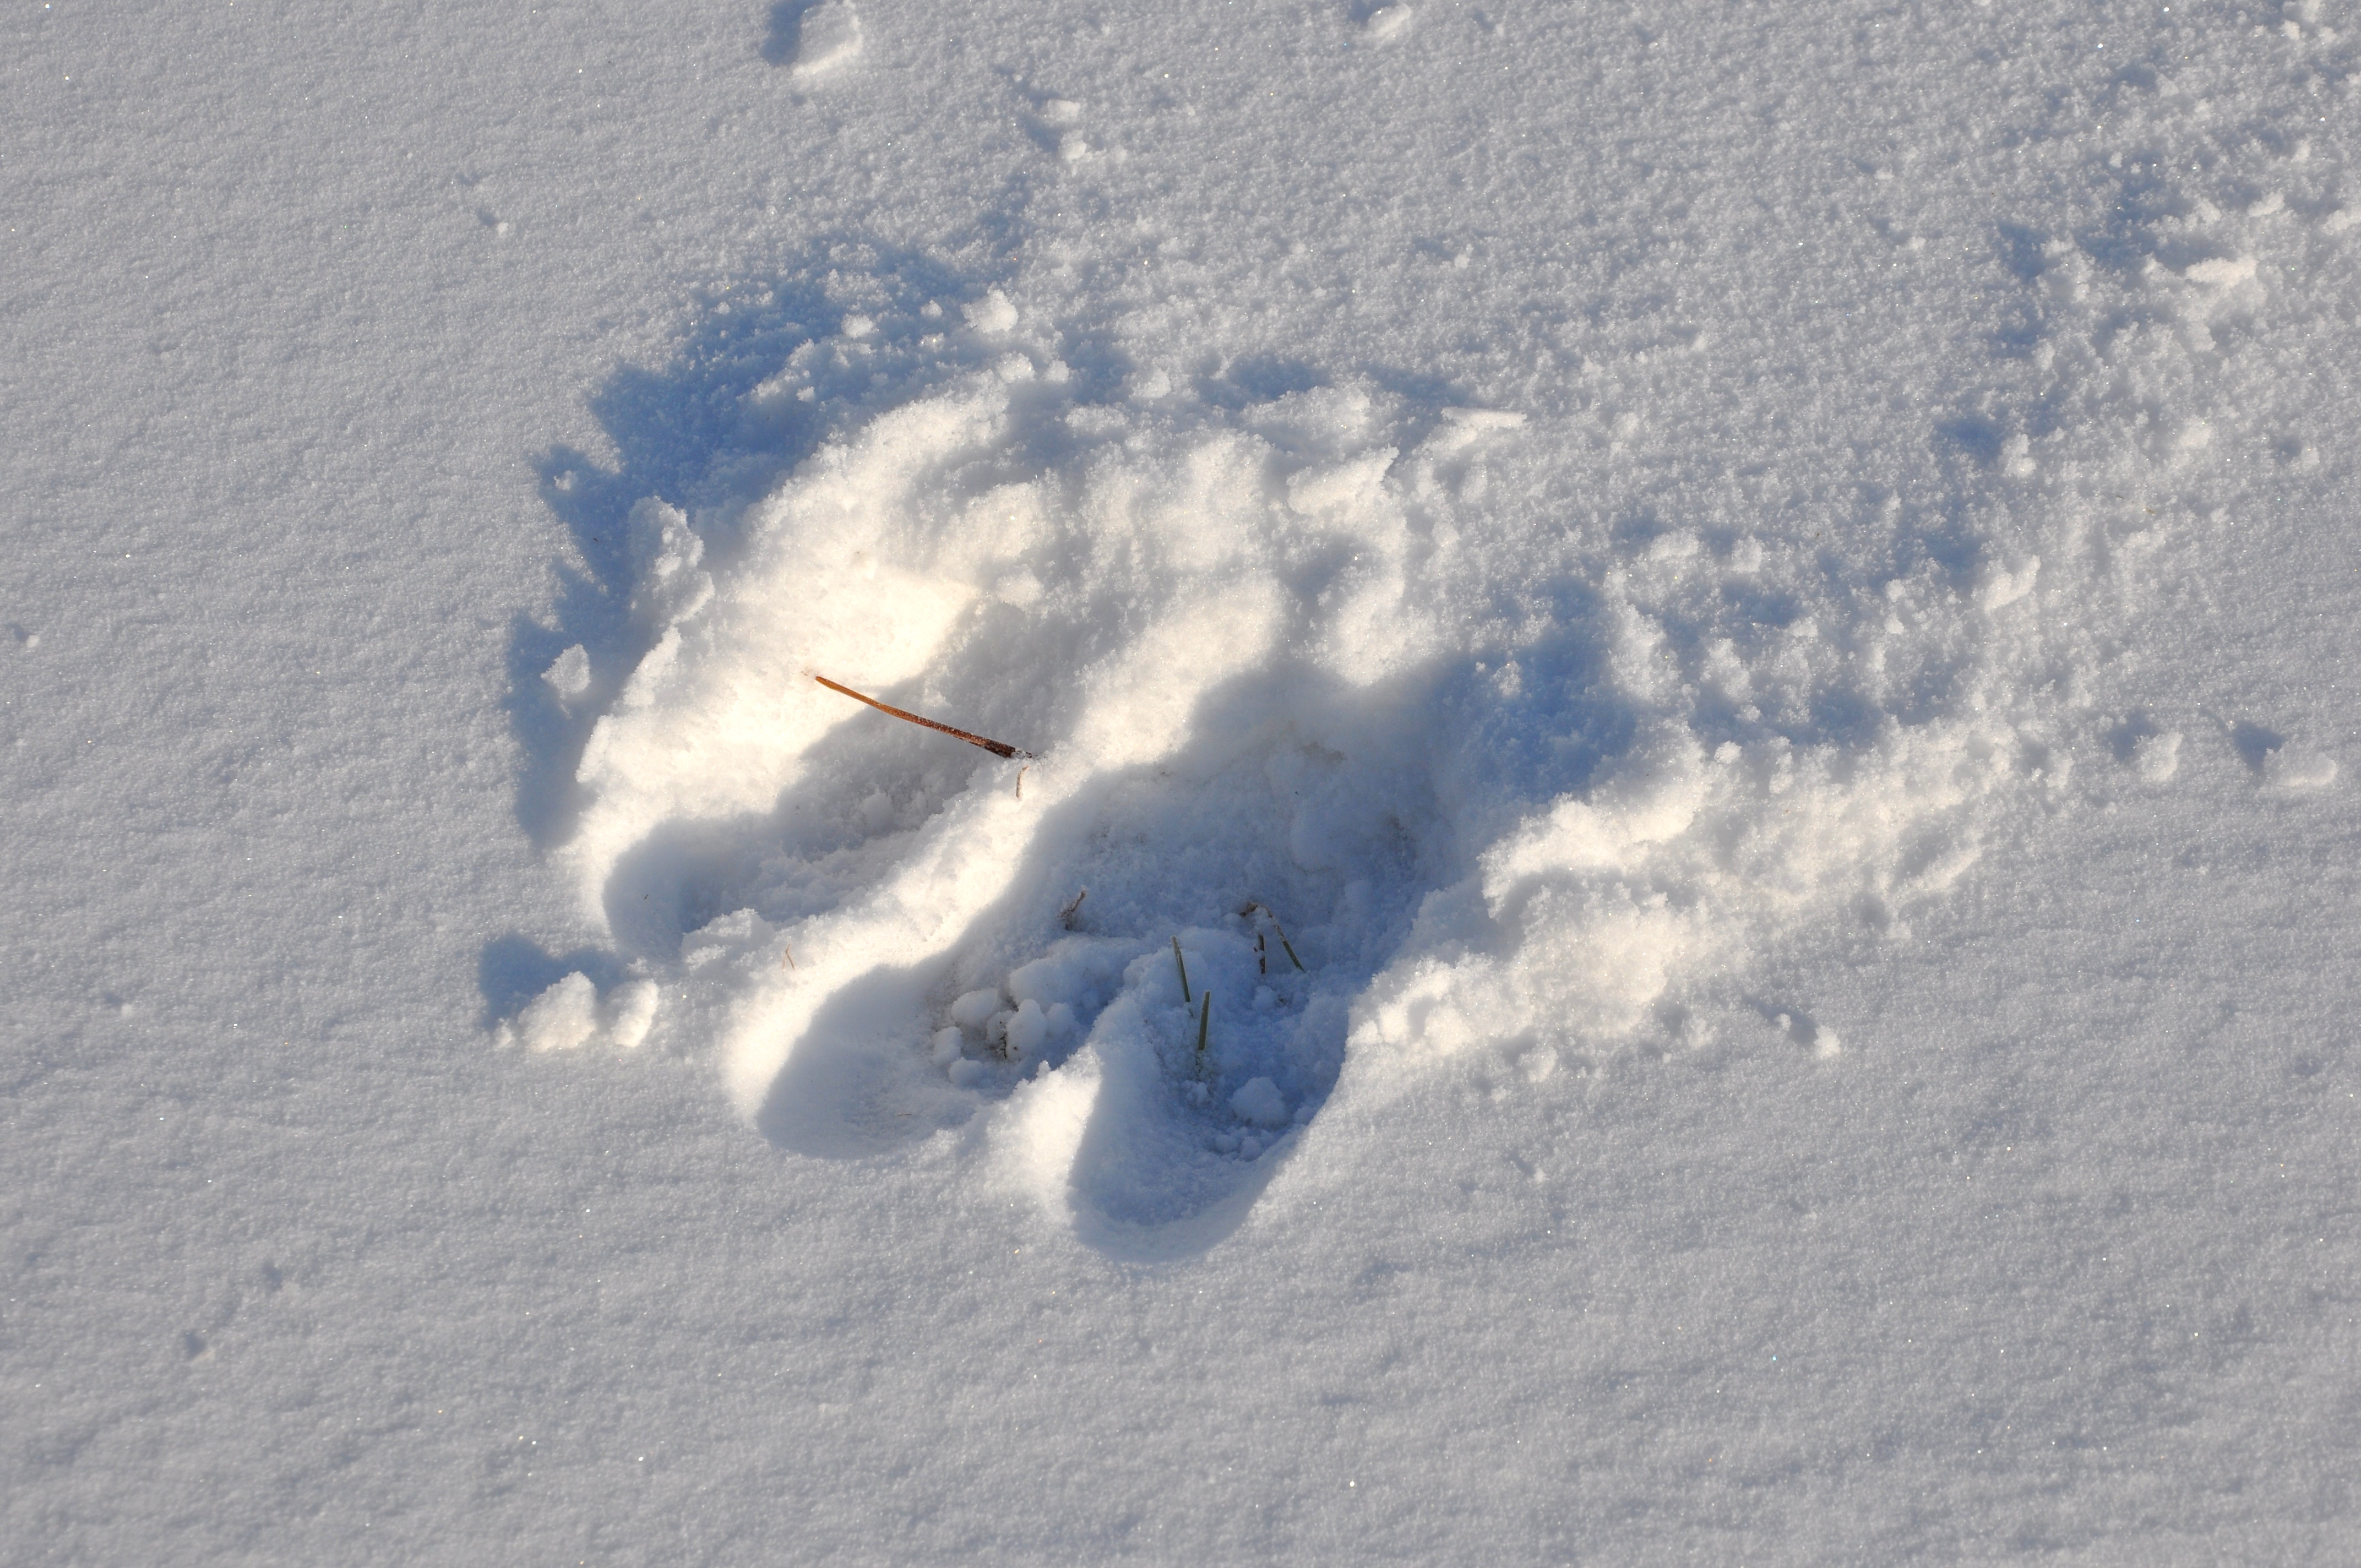 Moose Tracks In Snow